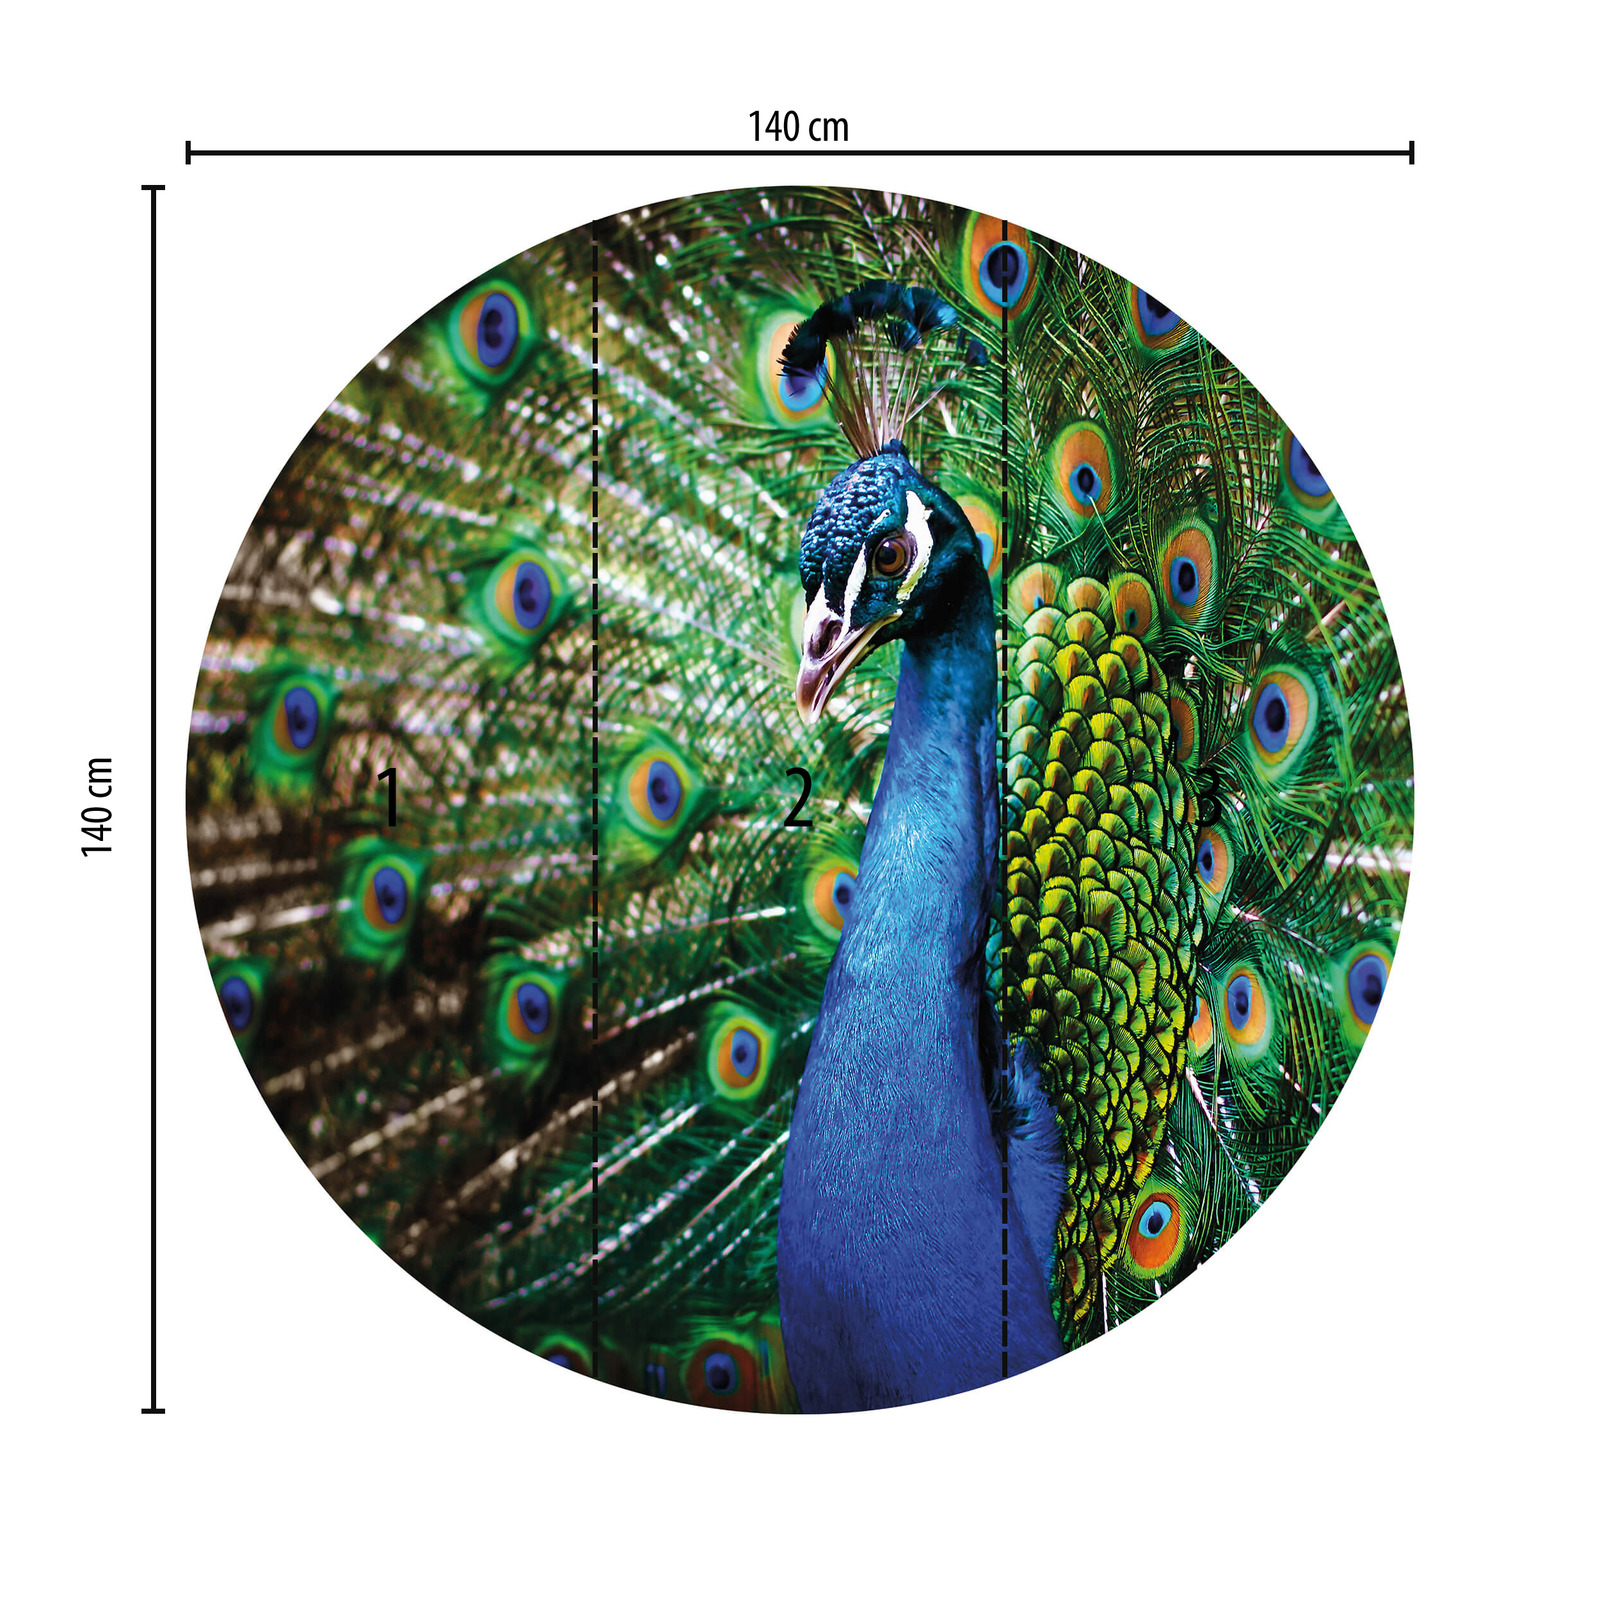             Photo wallpaper round peacock - green, blue, yellow
        